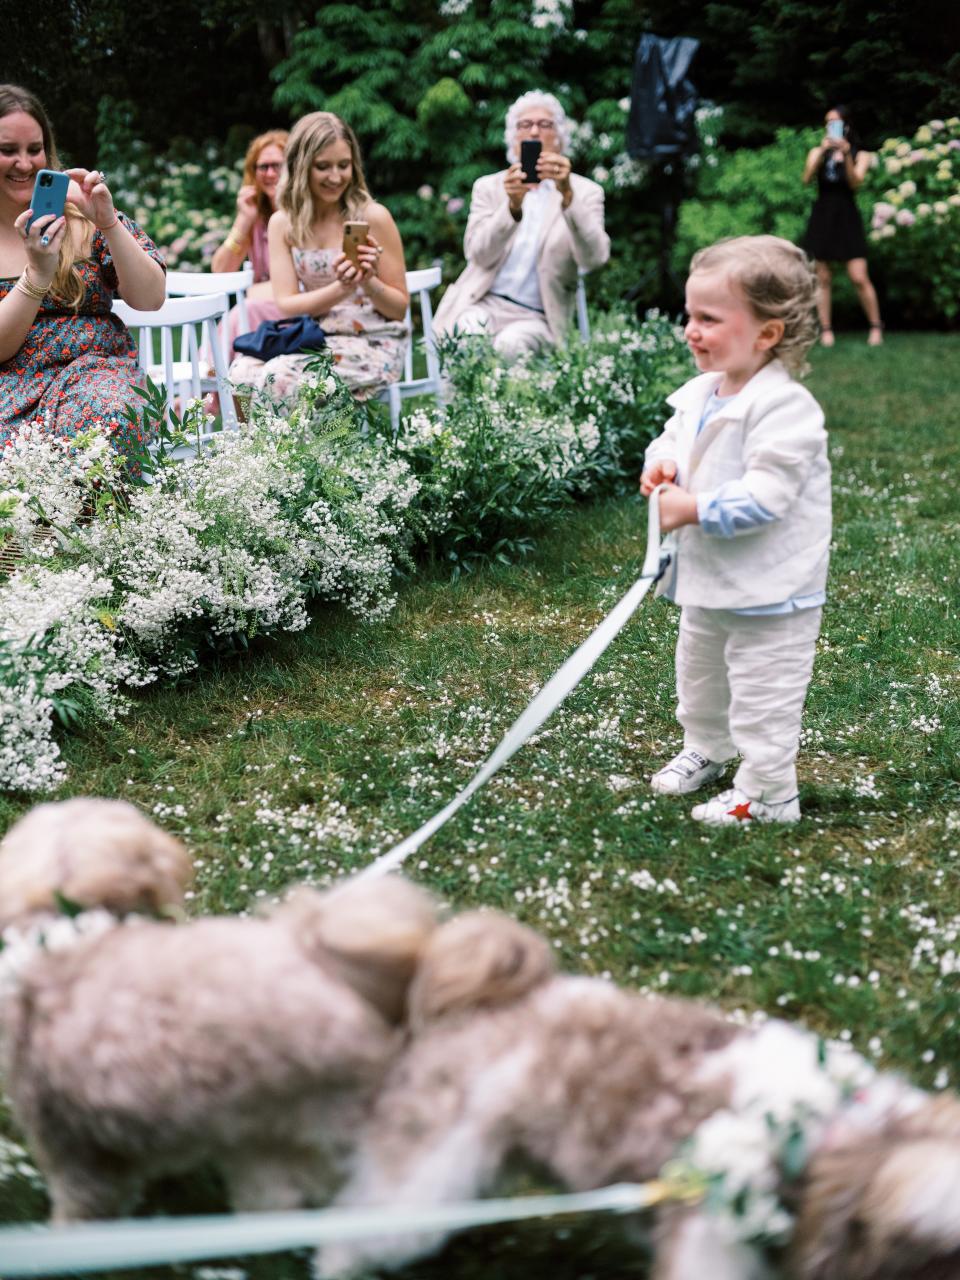 The Bride and Groom Said Their Vows Beneath a Floral Chuppah at This Hamptons Backyard Wedding